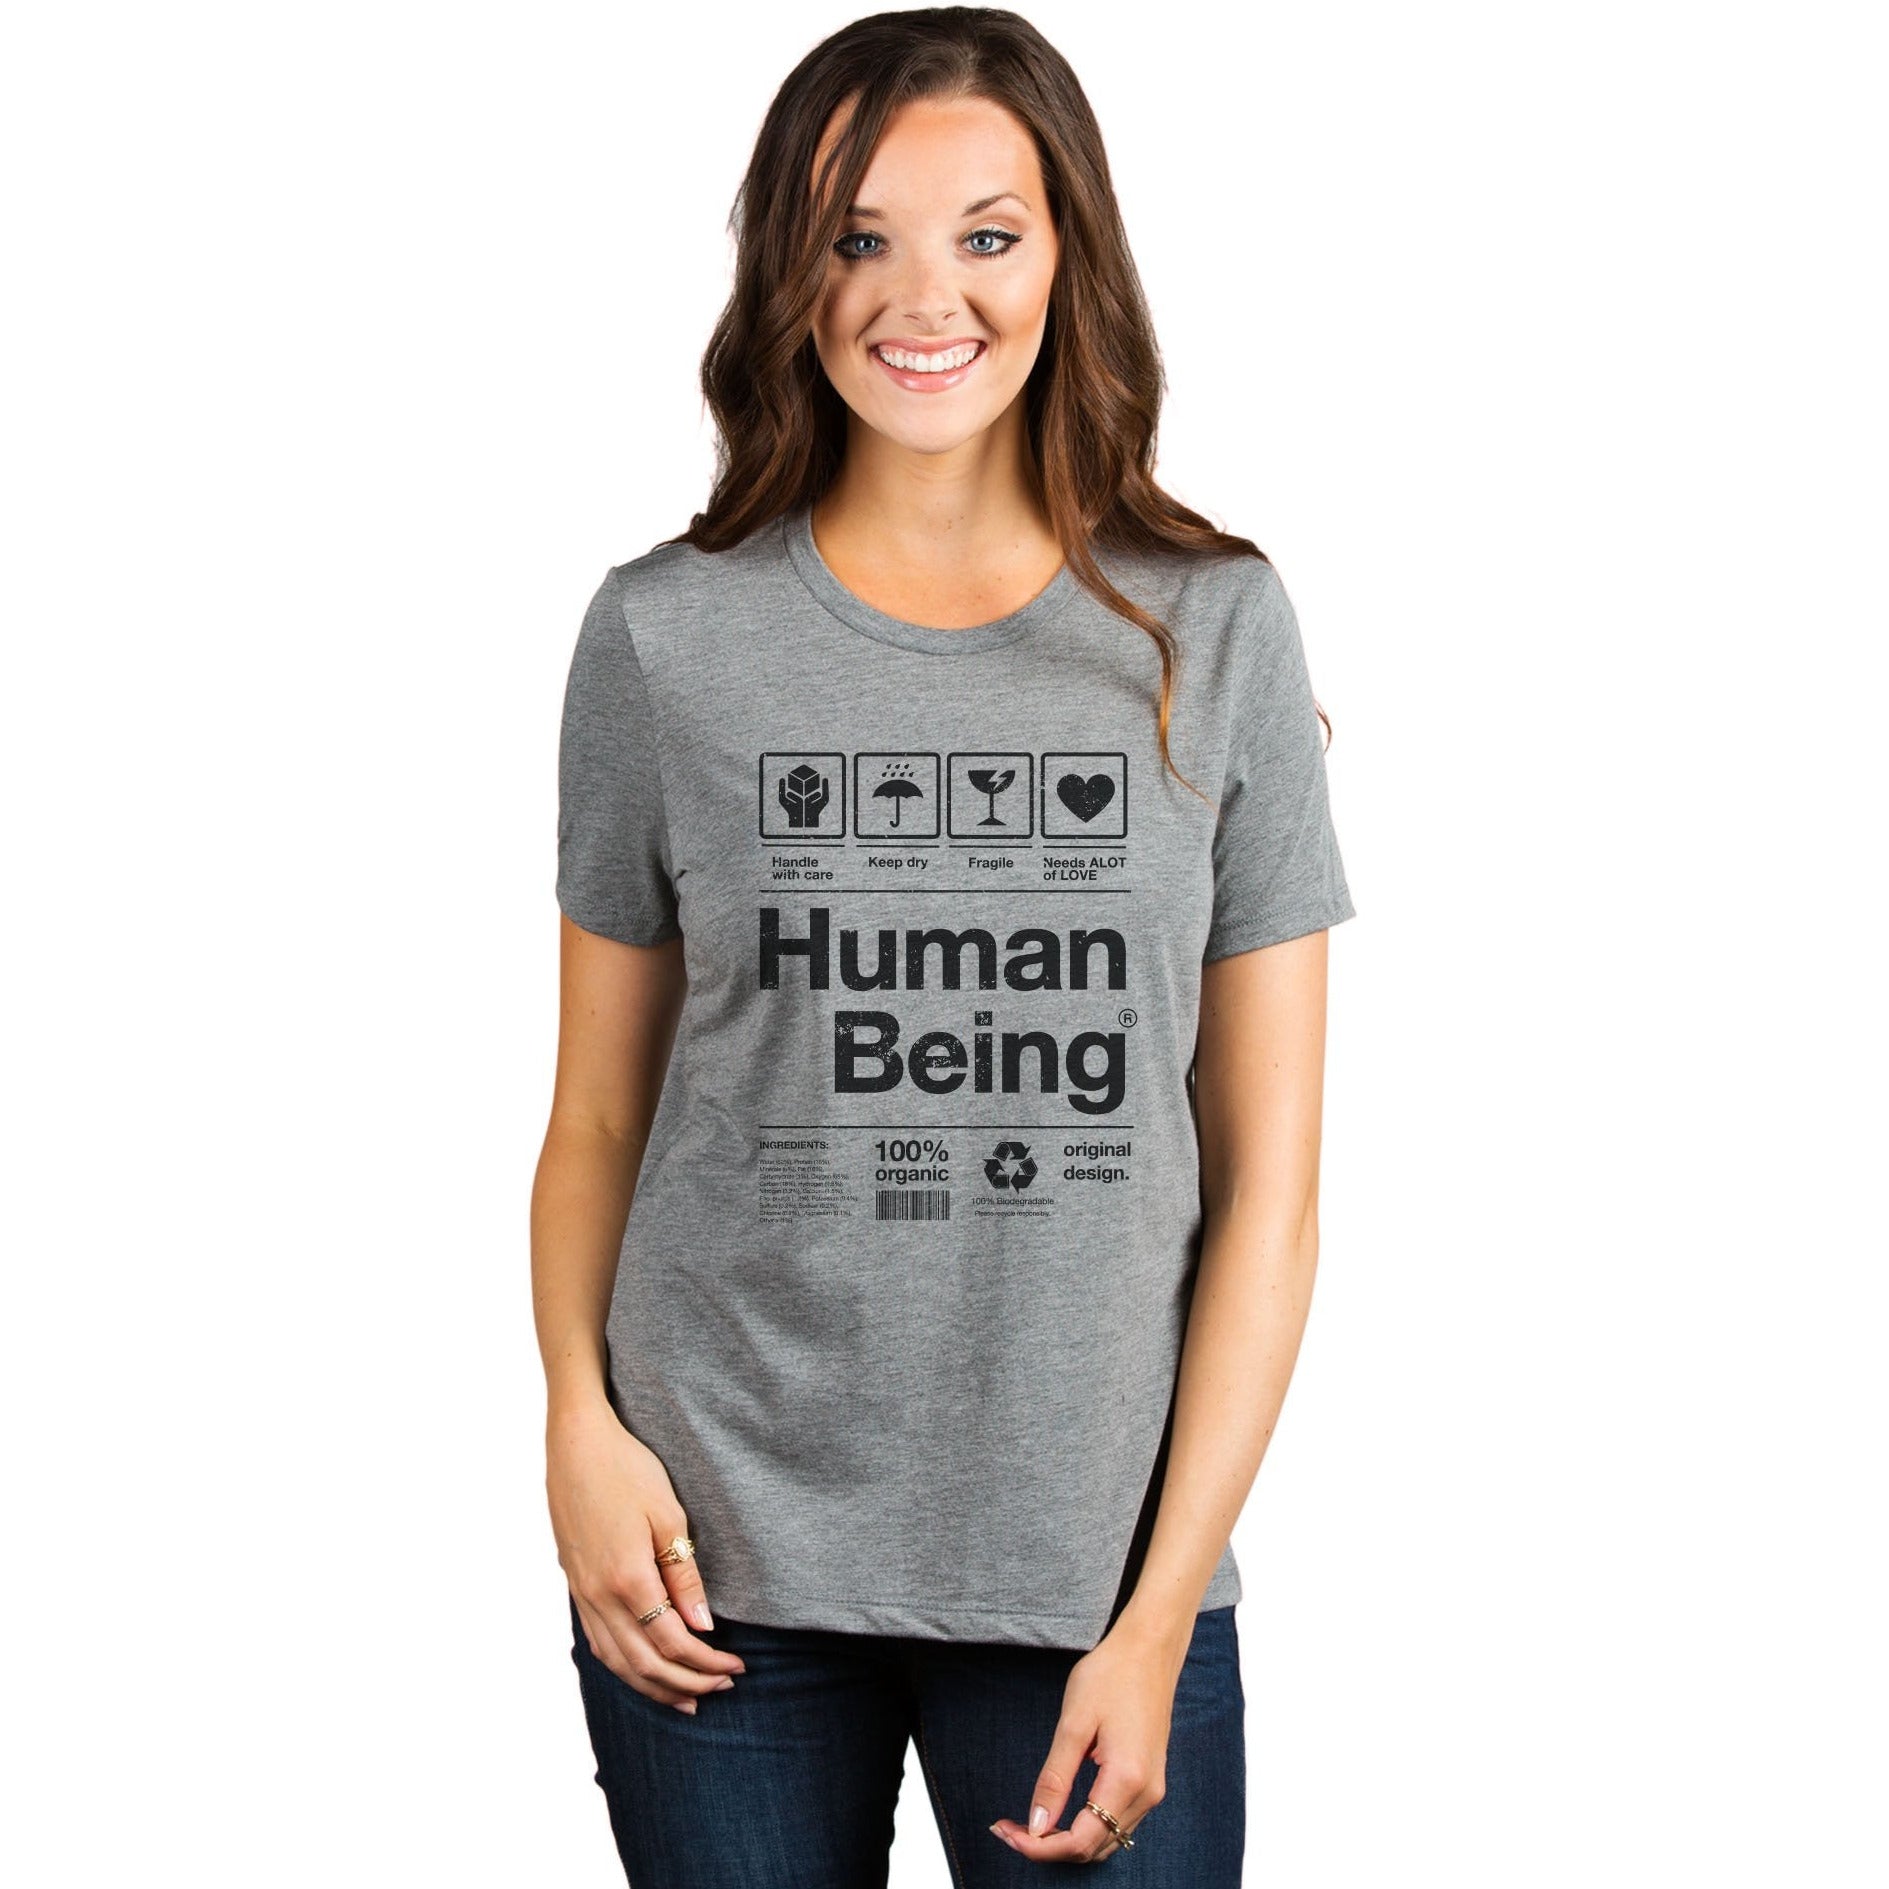 Human Being Women's Relaxed Crewneck T-Shirt Top Tee Heather Grey